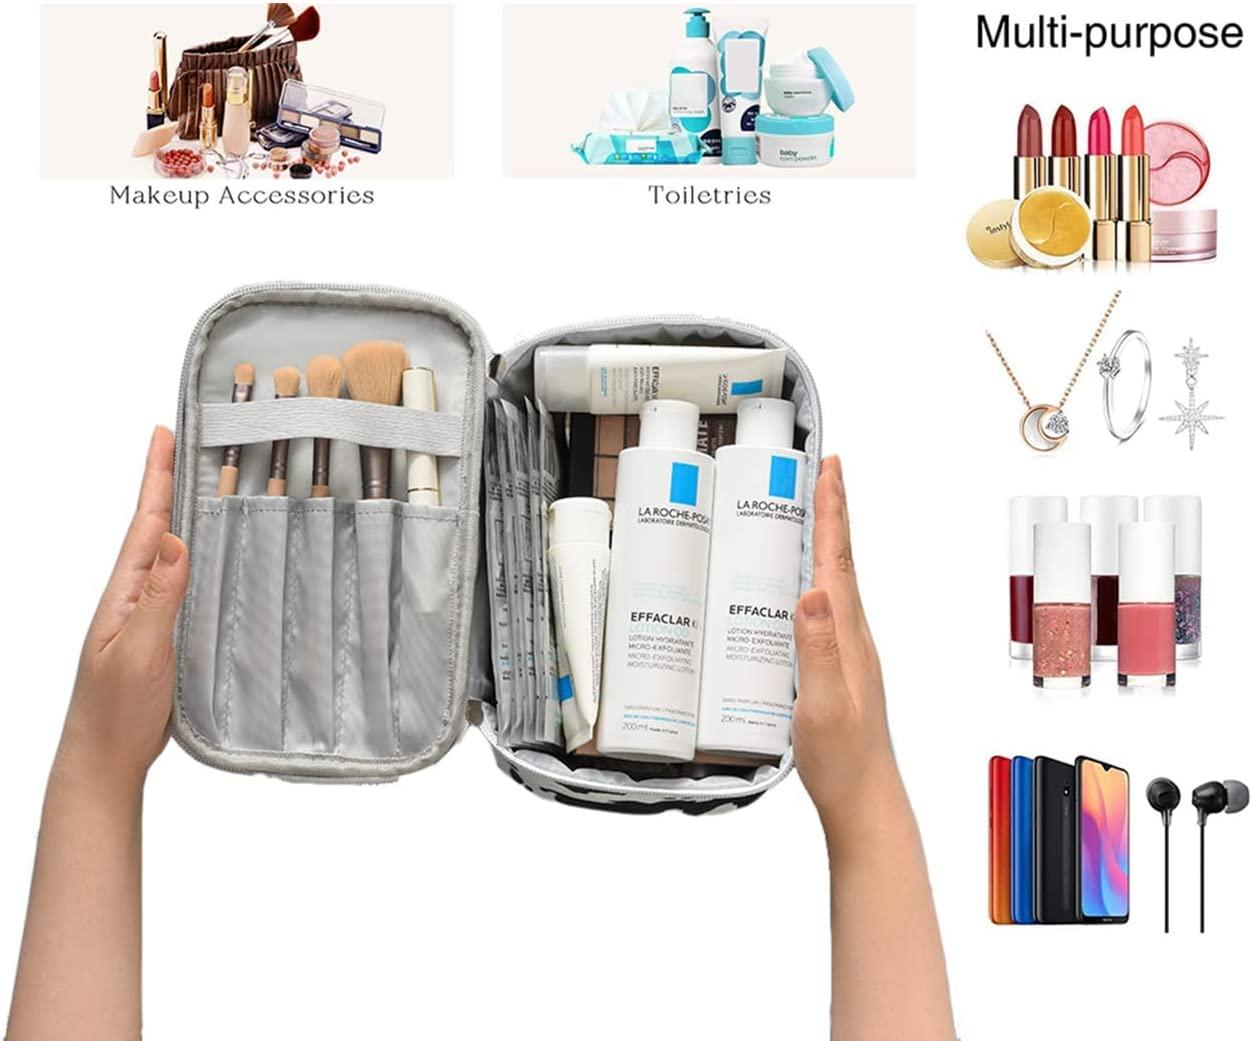 Portable Makeup Bag Cows Travel Small Zipper Cosmetic Bags